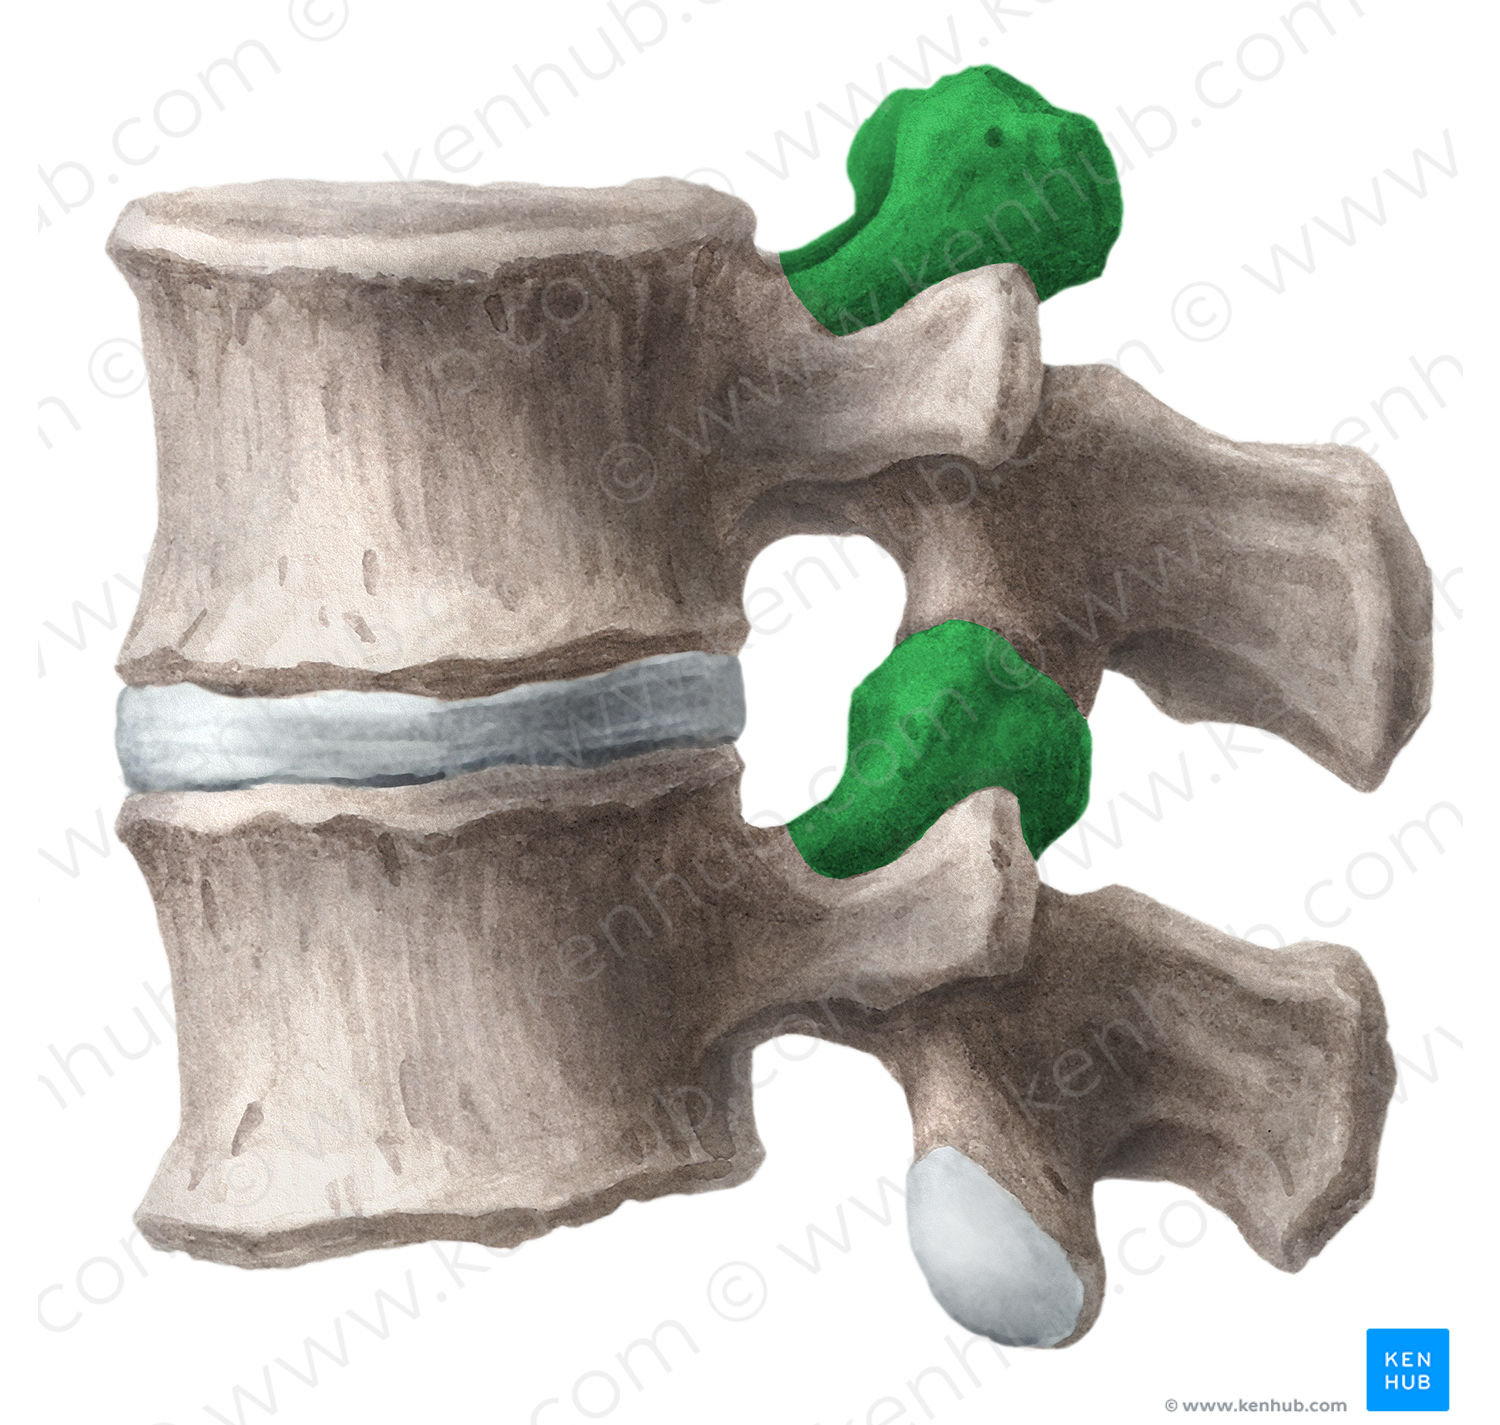 Superior articular process of vertebra (#21688)